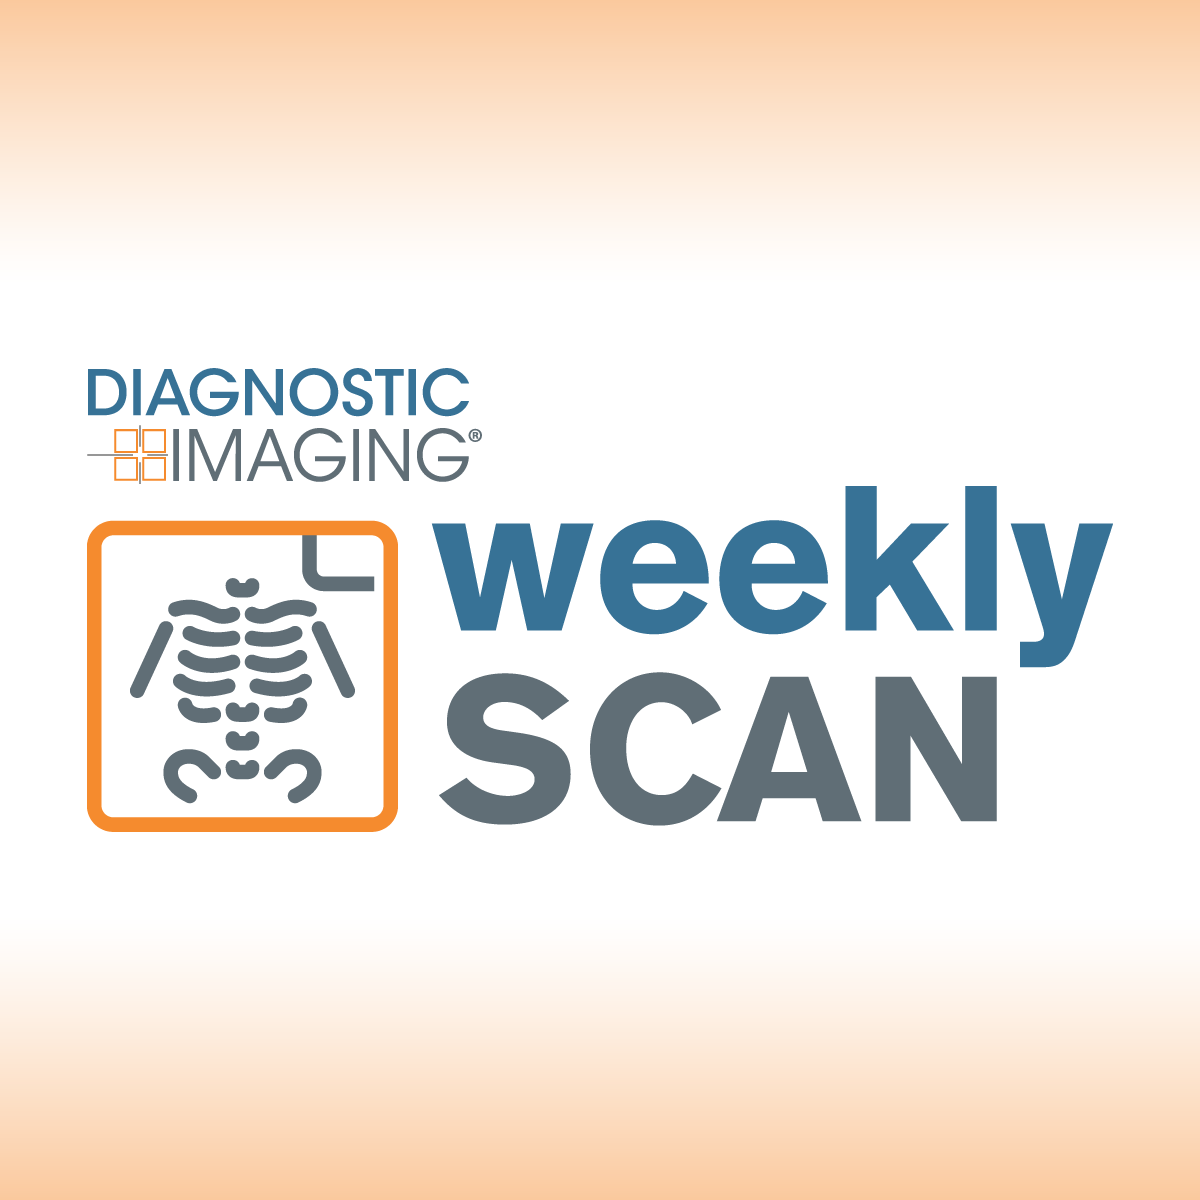 Diagnostic Imaging's Weekly Scan: December 17-December 23